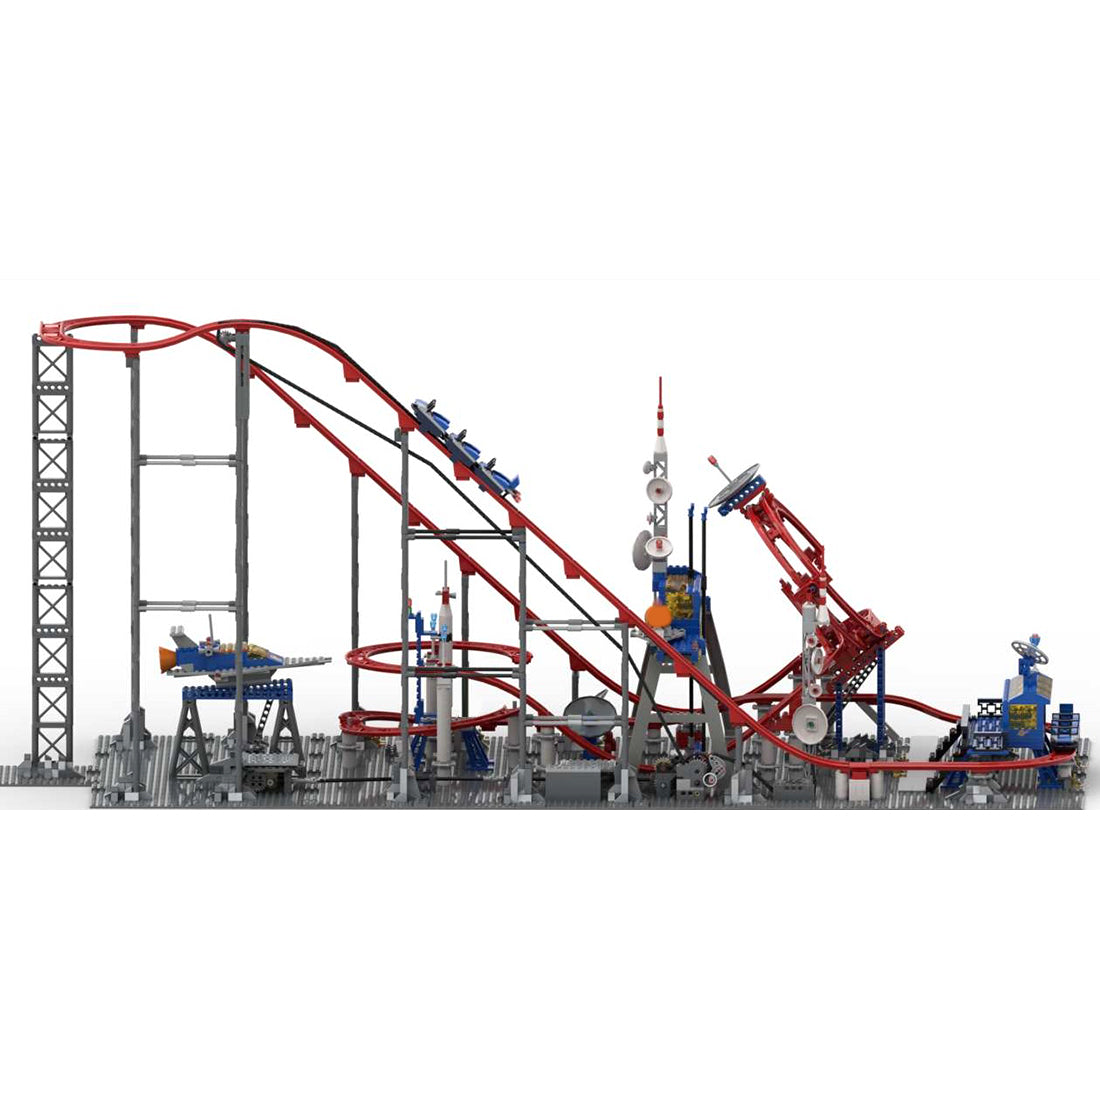 MOC-104035 Circular Roller Coaster(Dynamic)